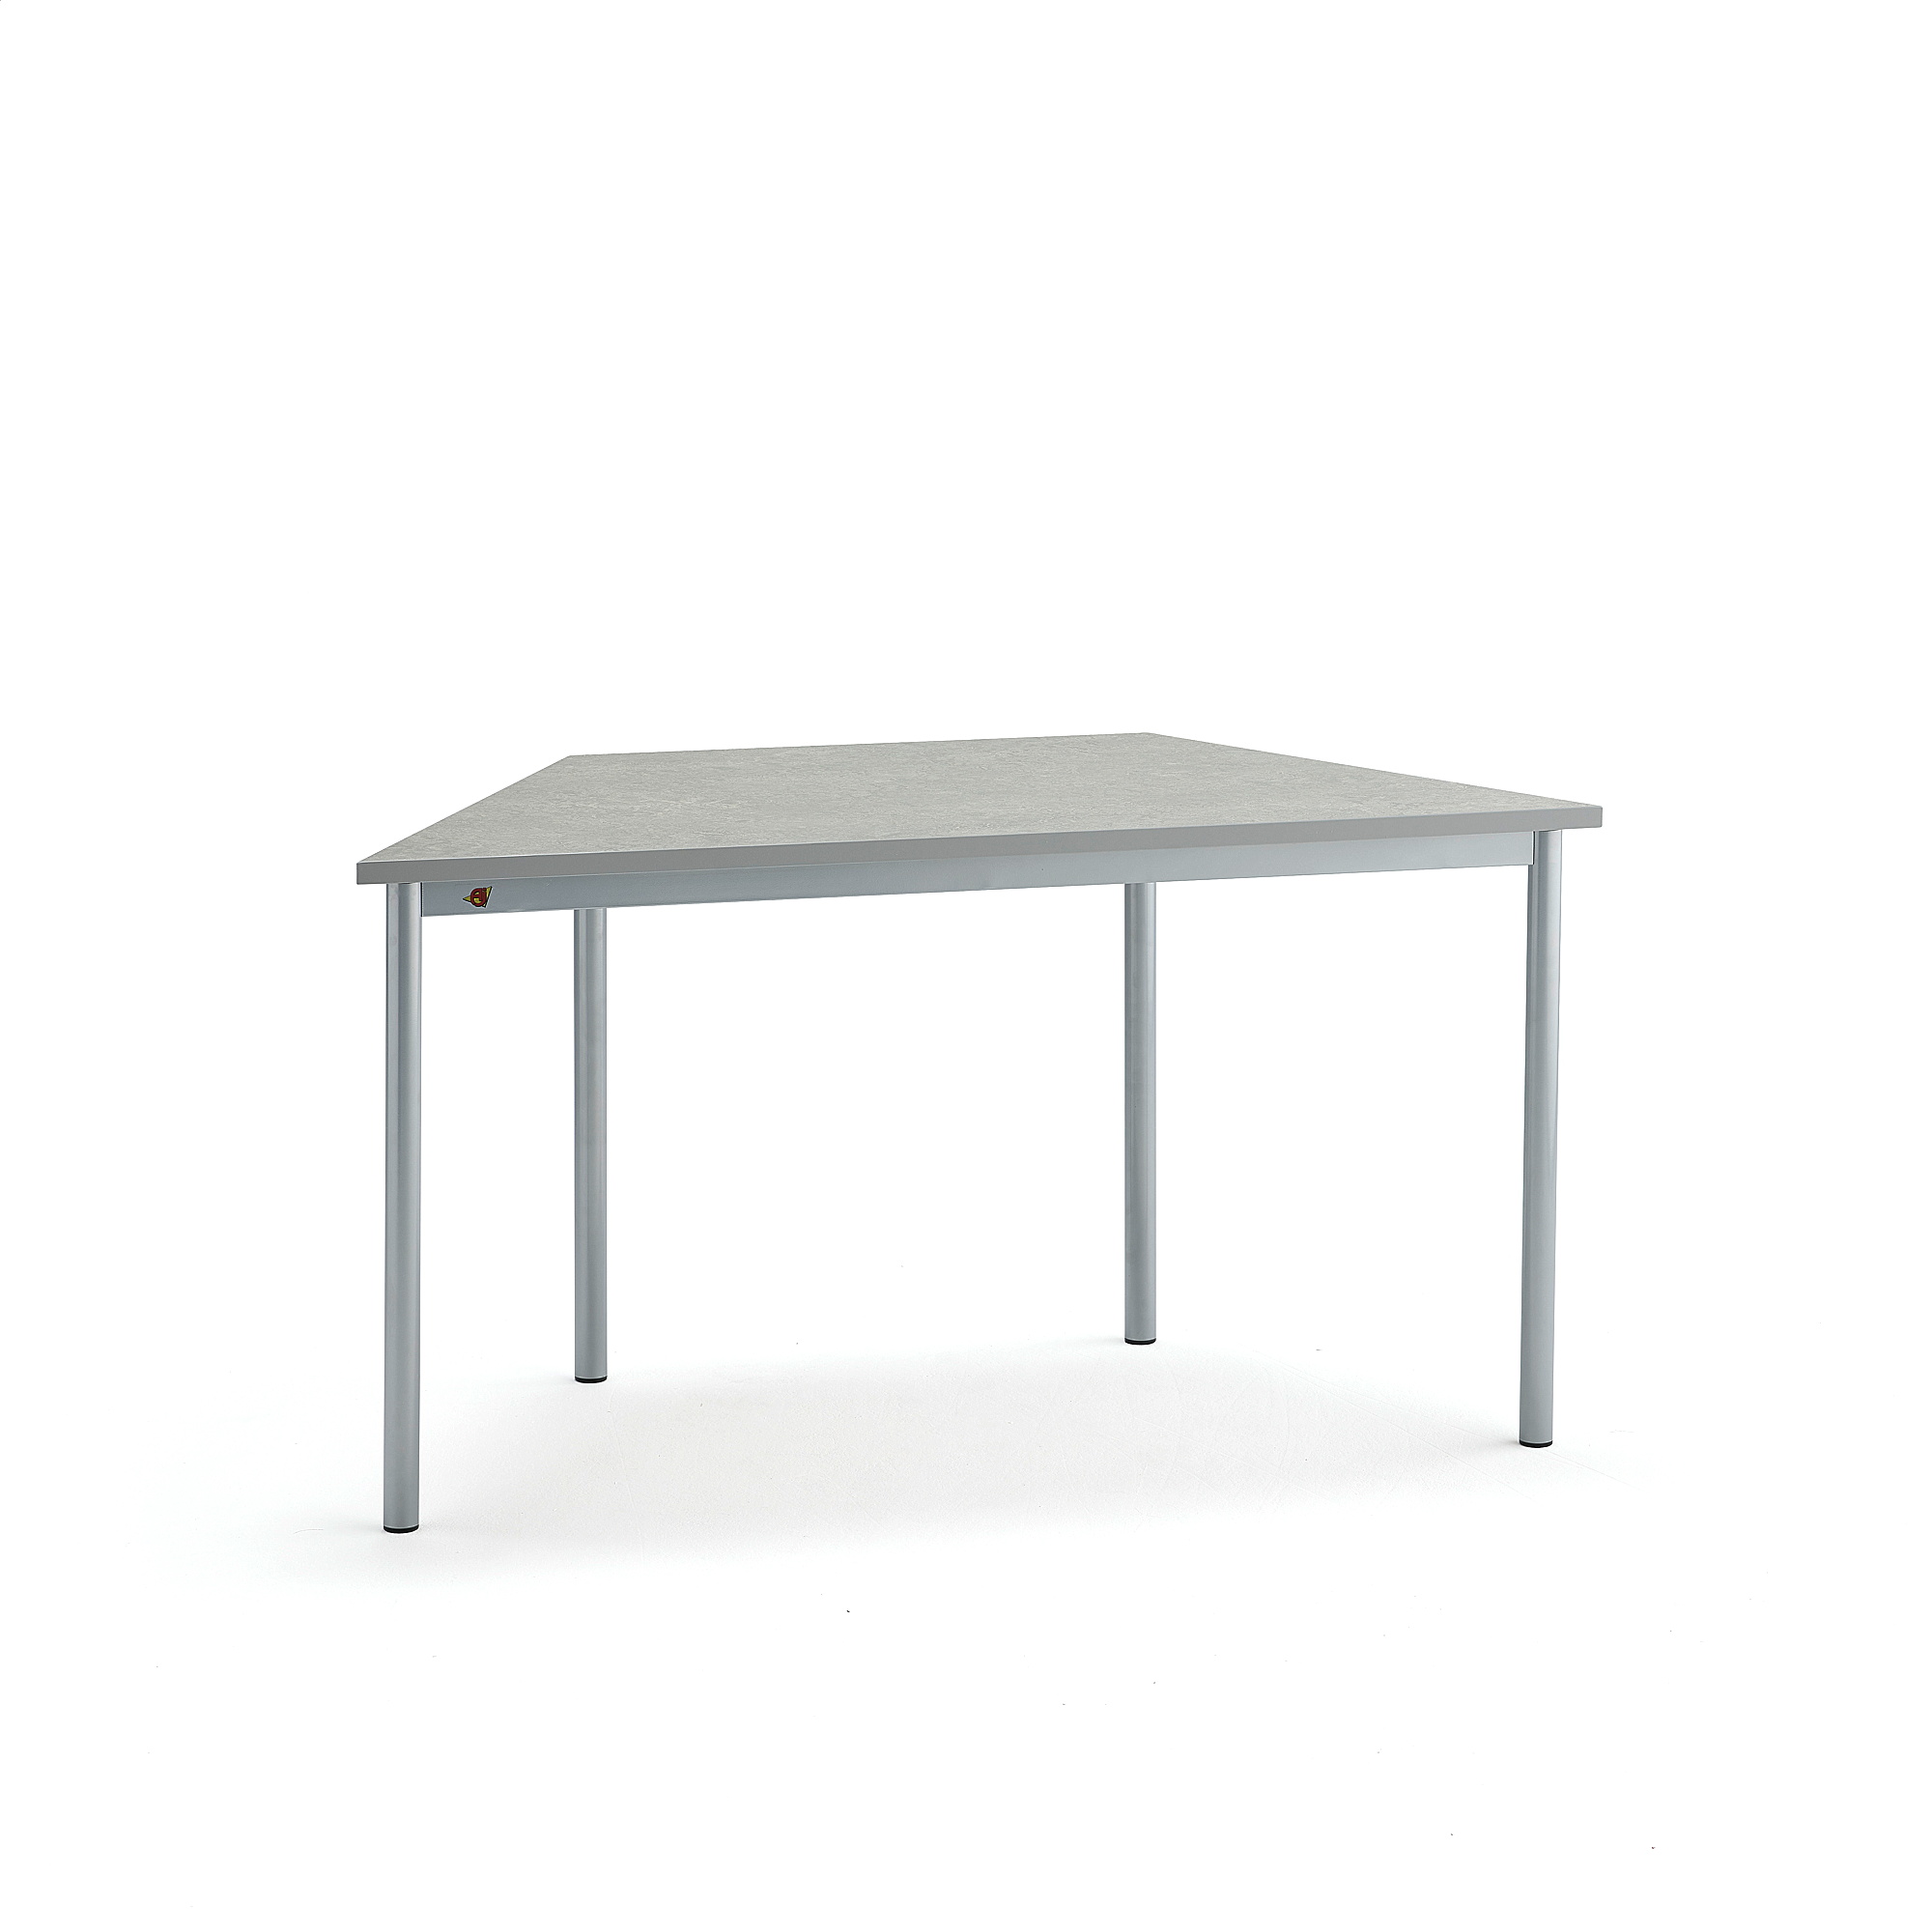 Stůl SONITUS TRAPETS, 1400x700x720 mm, stříbrné nohy, deska s linoleem, šedá